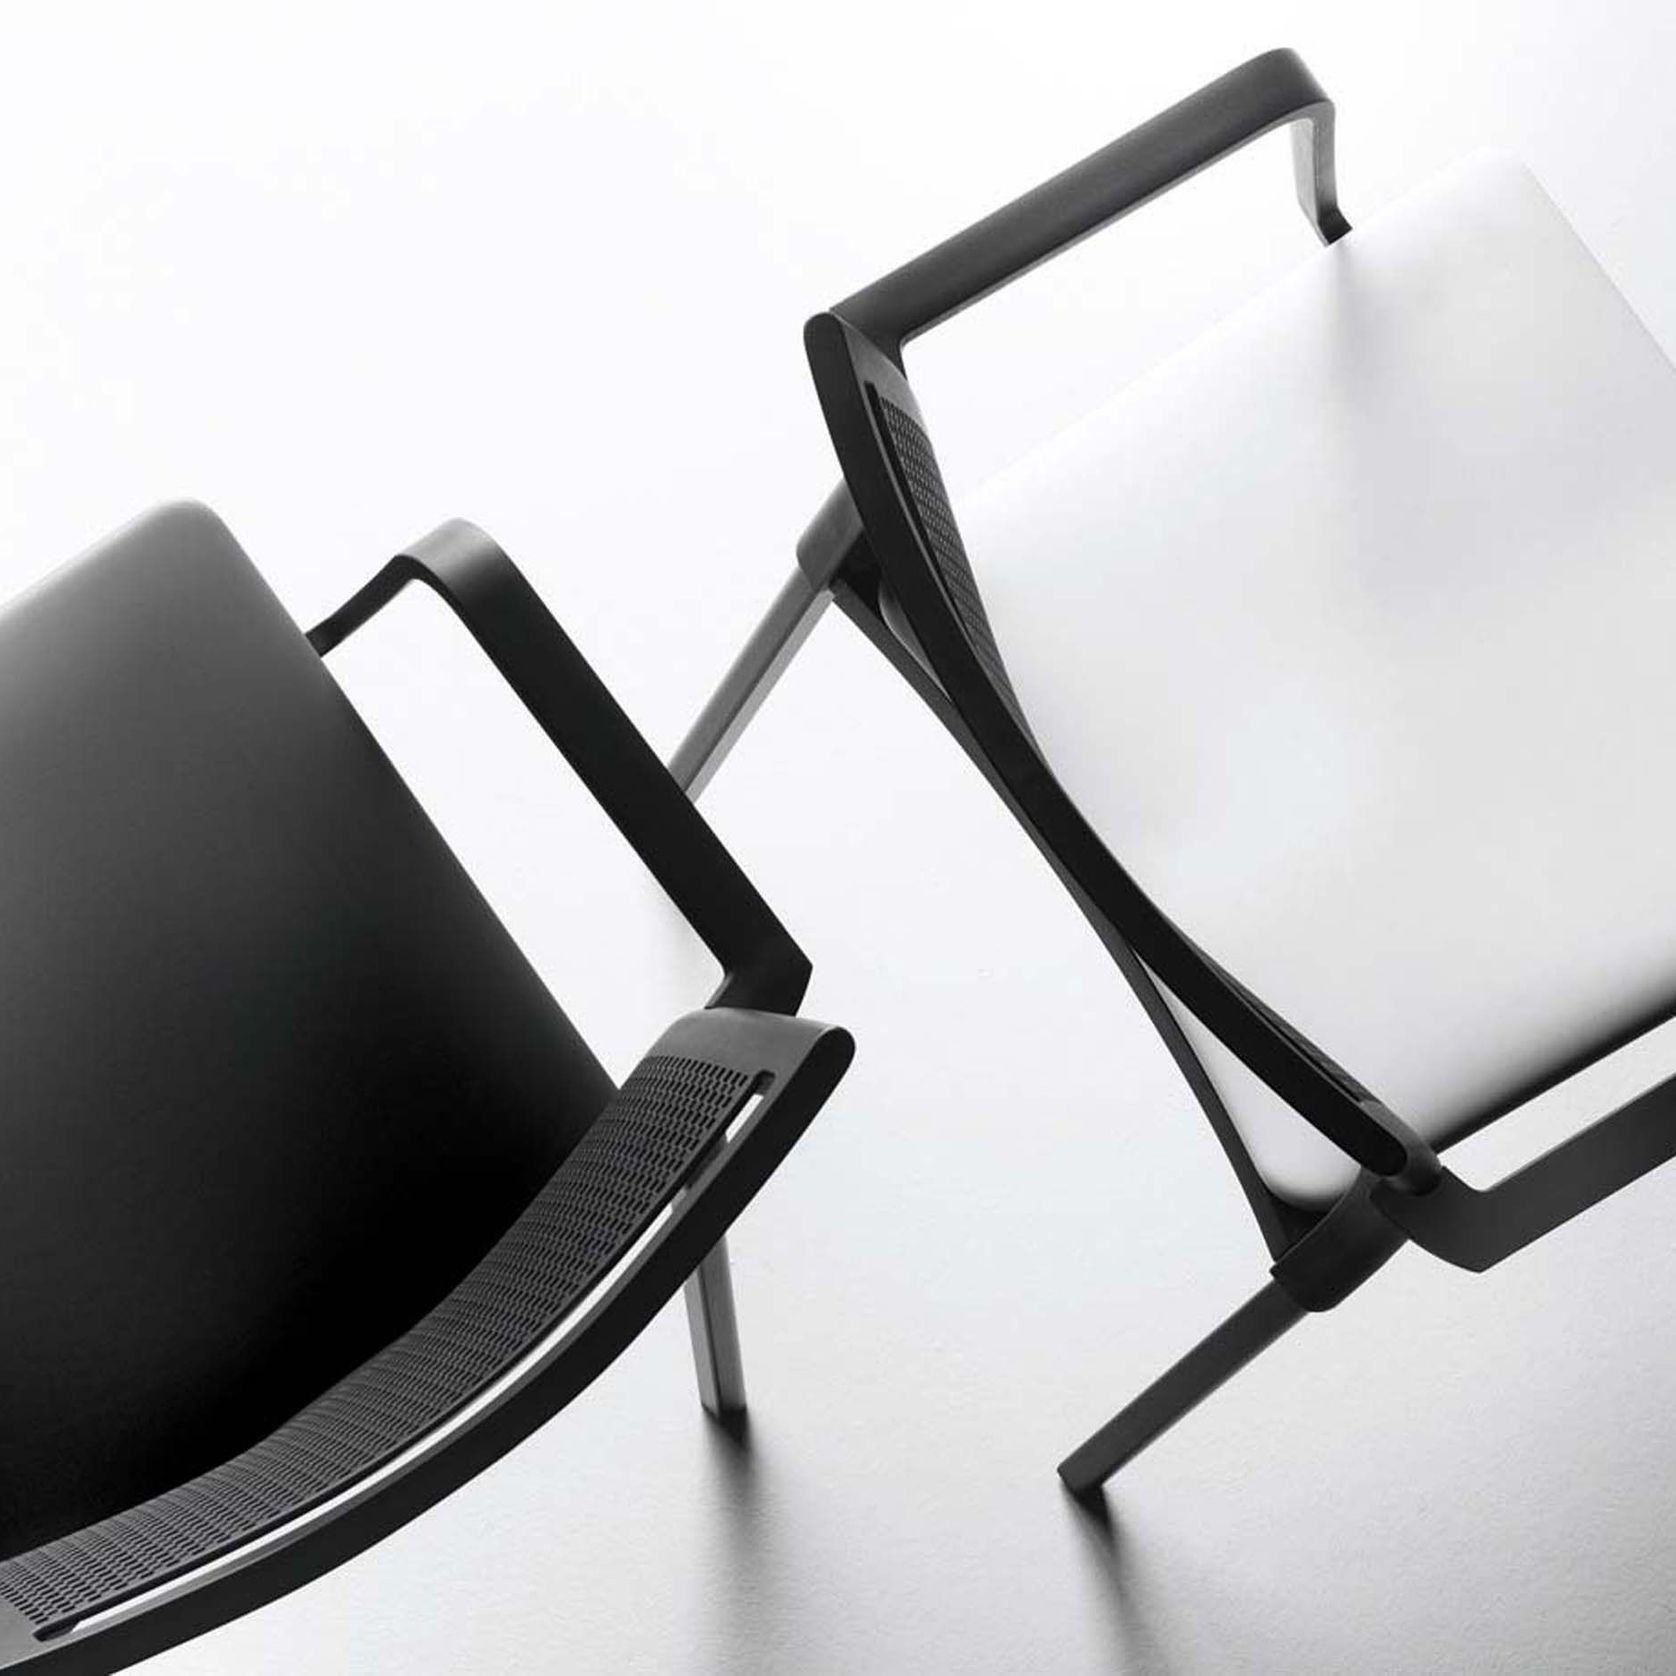 Kool Chair Upholstered gallery detail image